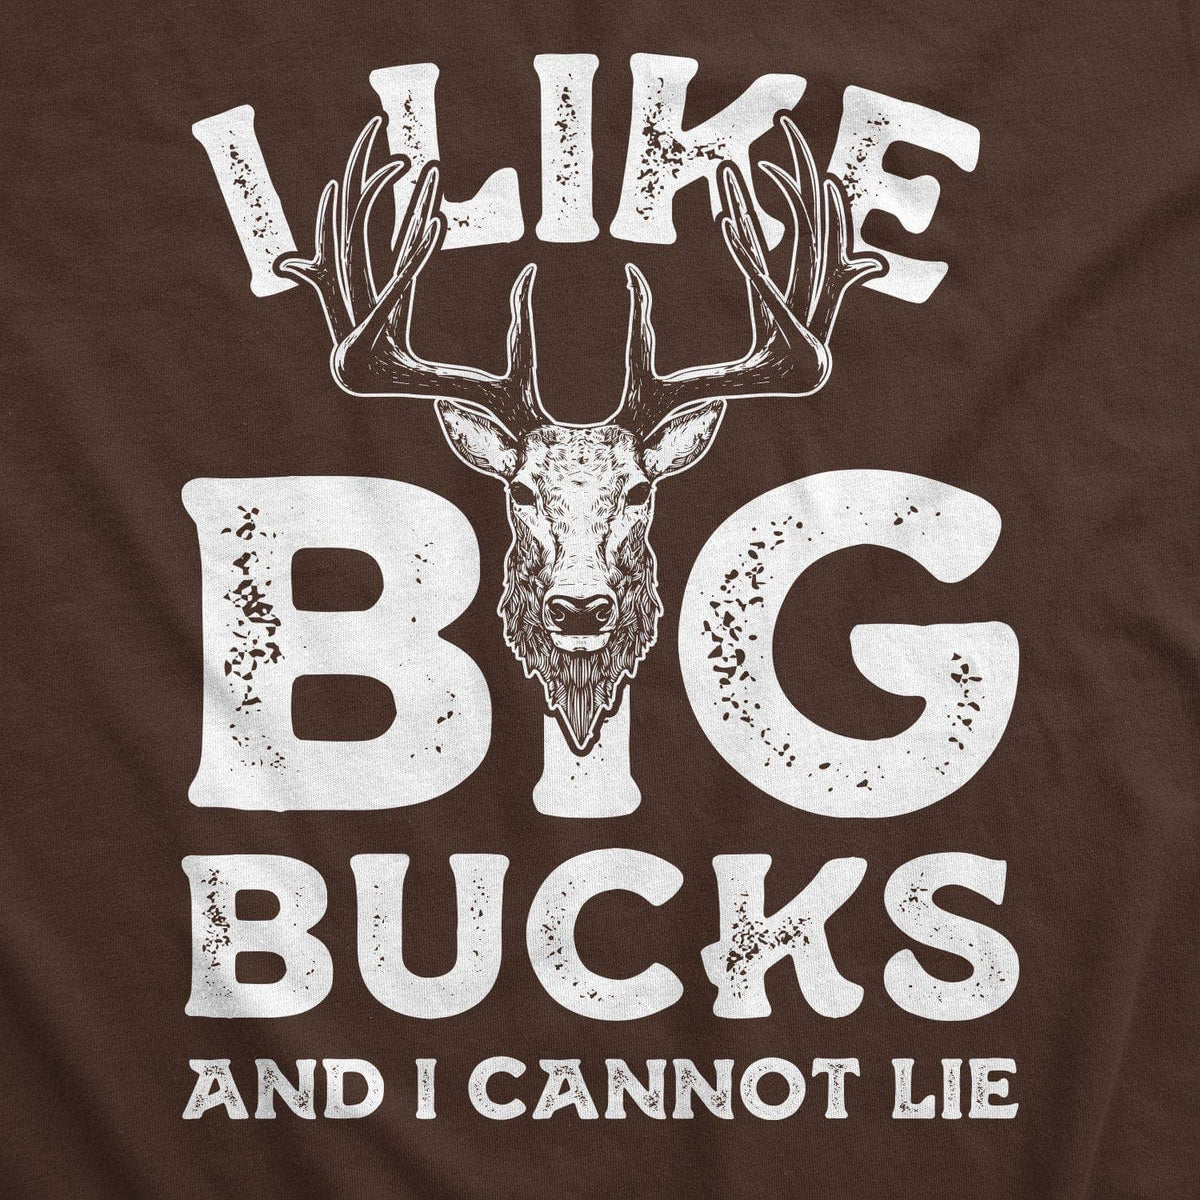 I Like Big Bucks And I Cannot Lie Men&#39;s Tshirt - Crazy Dog T-Shirts